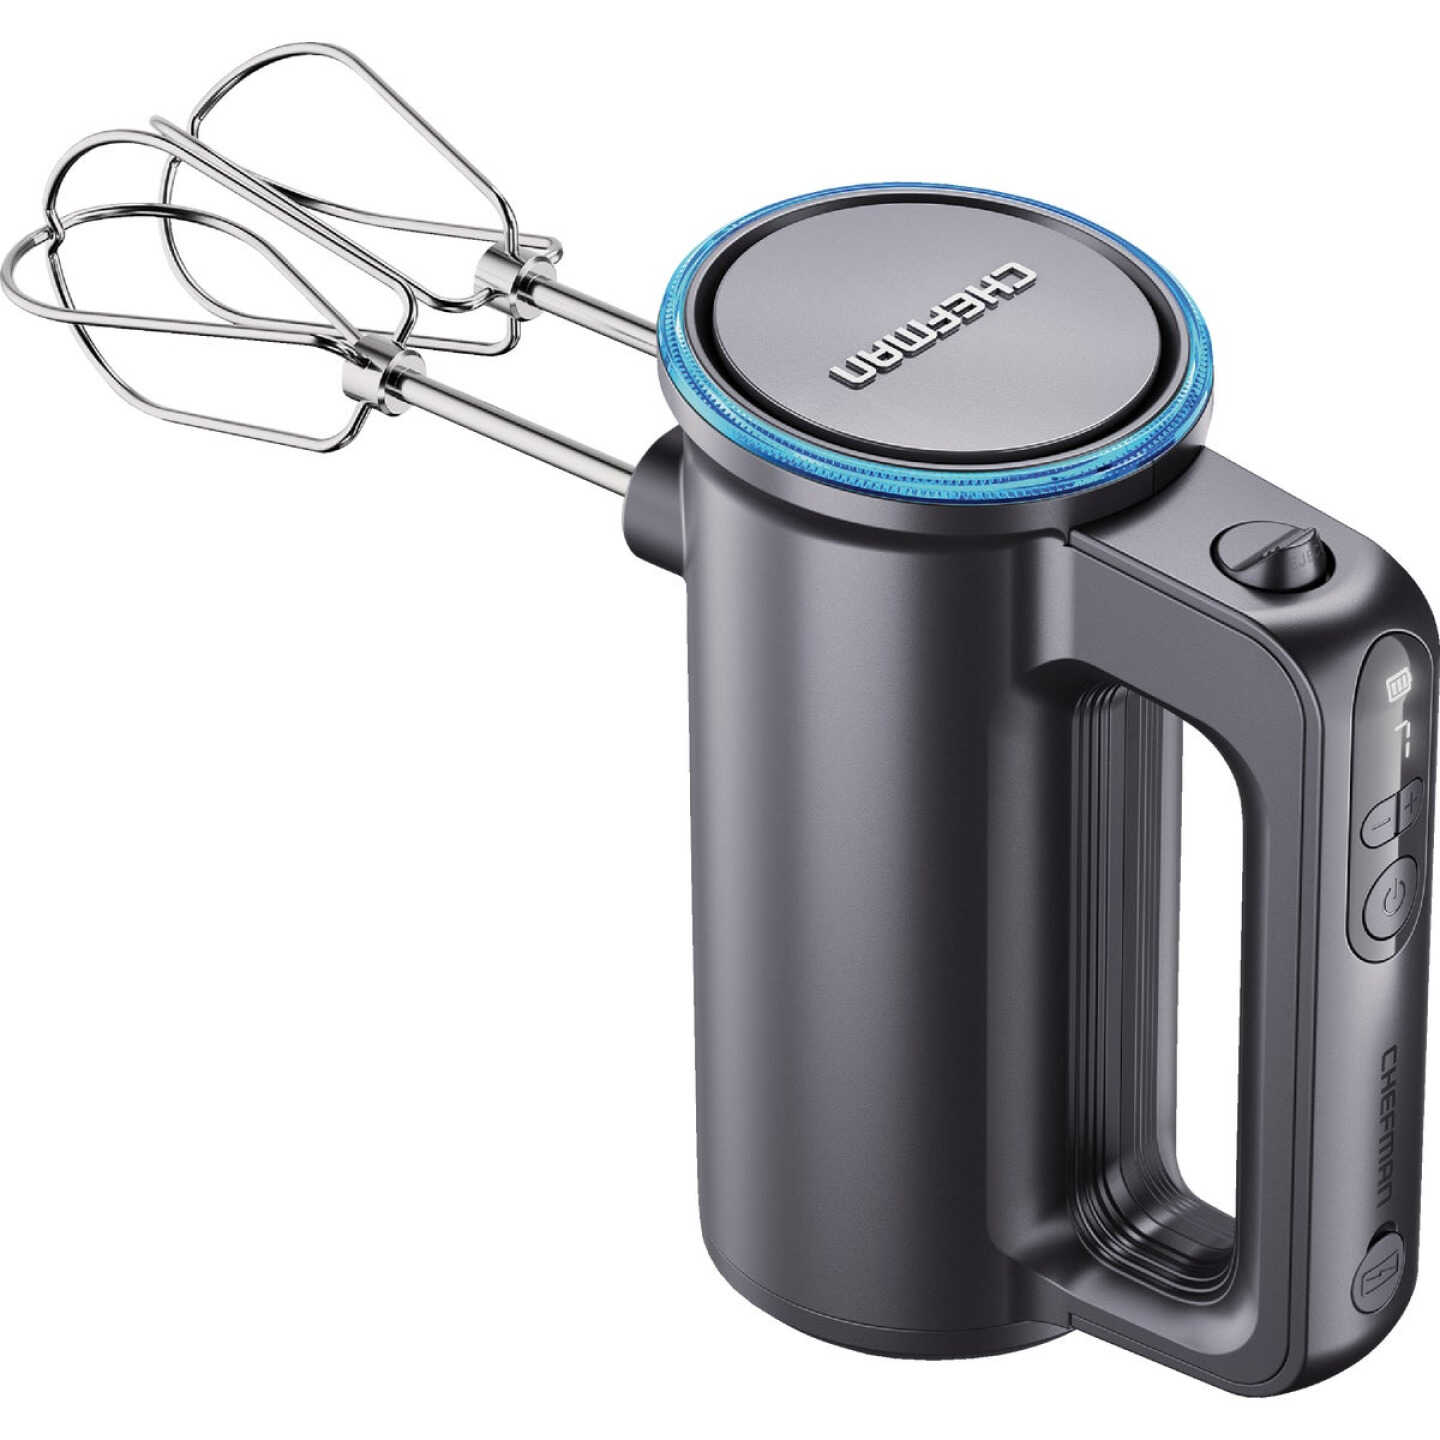 Portable Electric Cordless Handheld Mixer, 3-Speed Adjustable